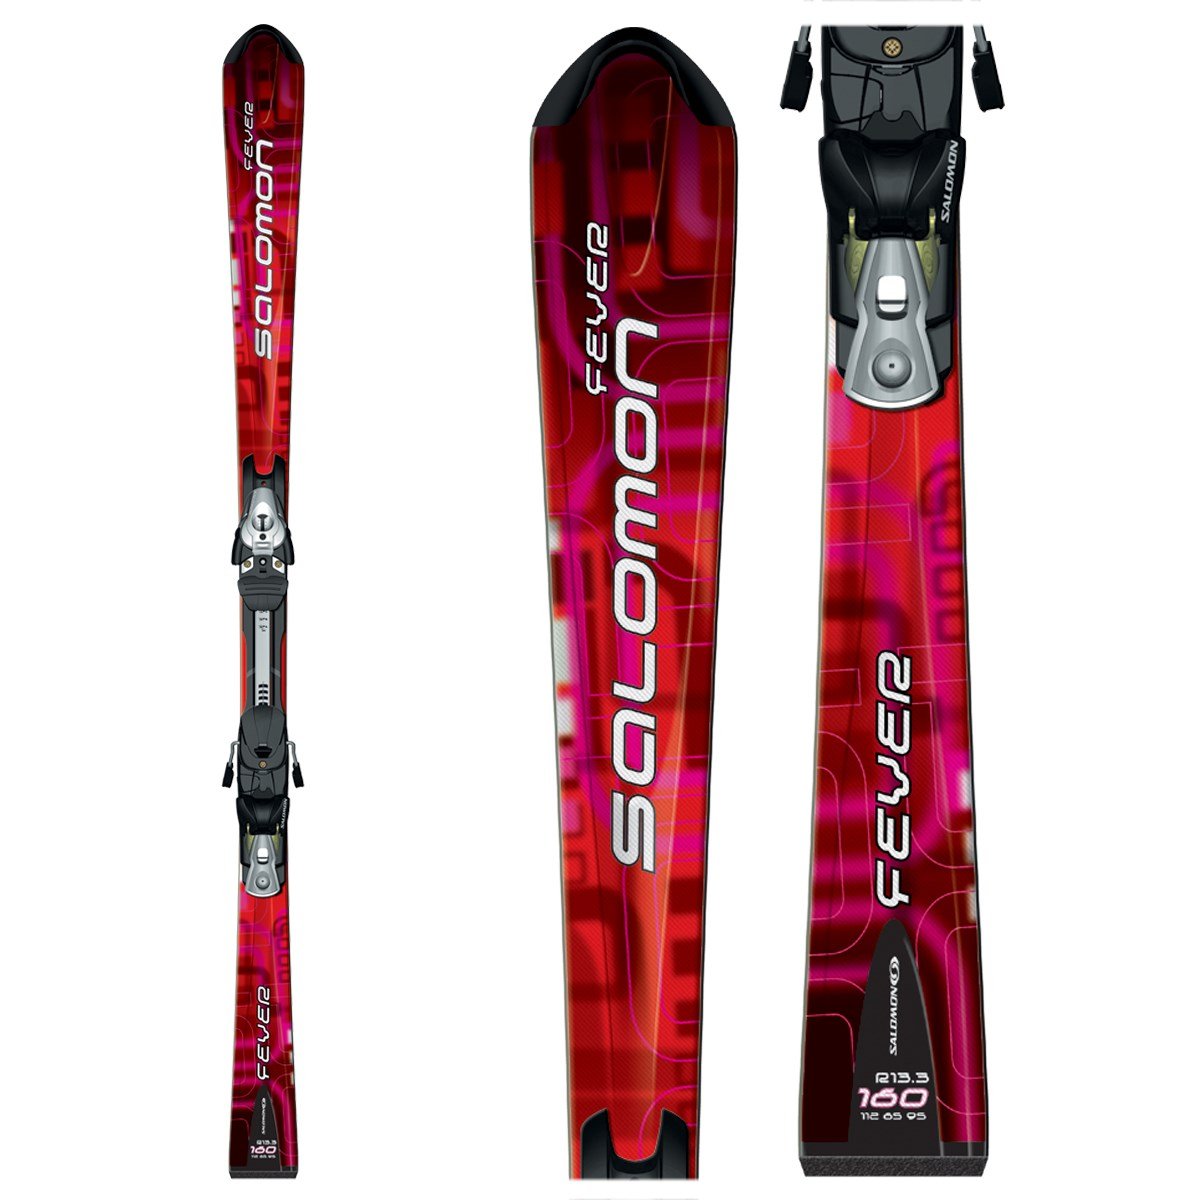 Salomon ski. Salomon 13r лыжи. Горные лыжи Salomon женские февер. Salomon лыжи горные розовые.